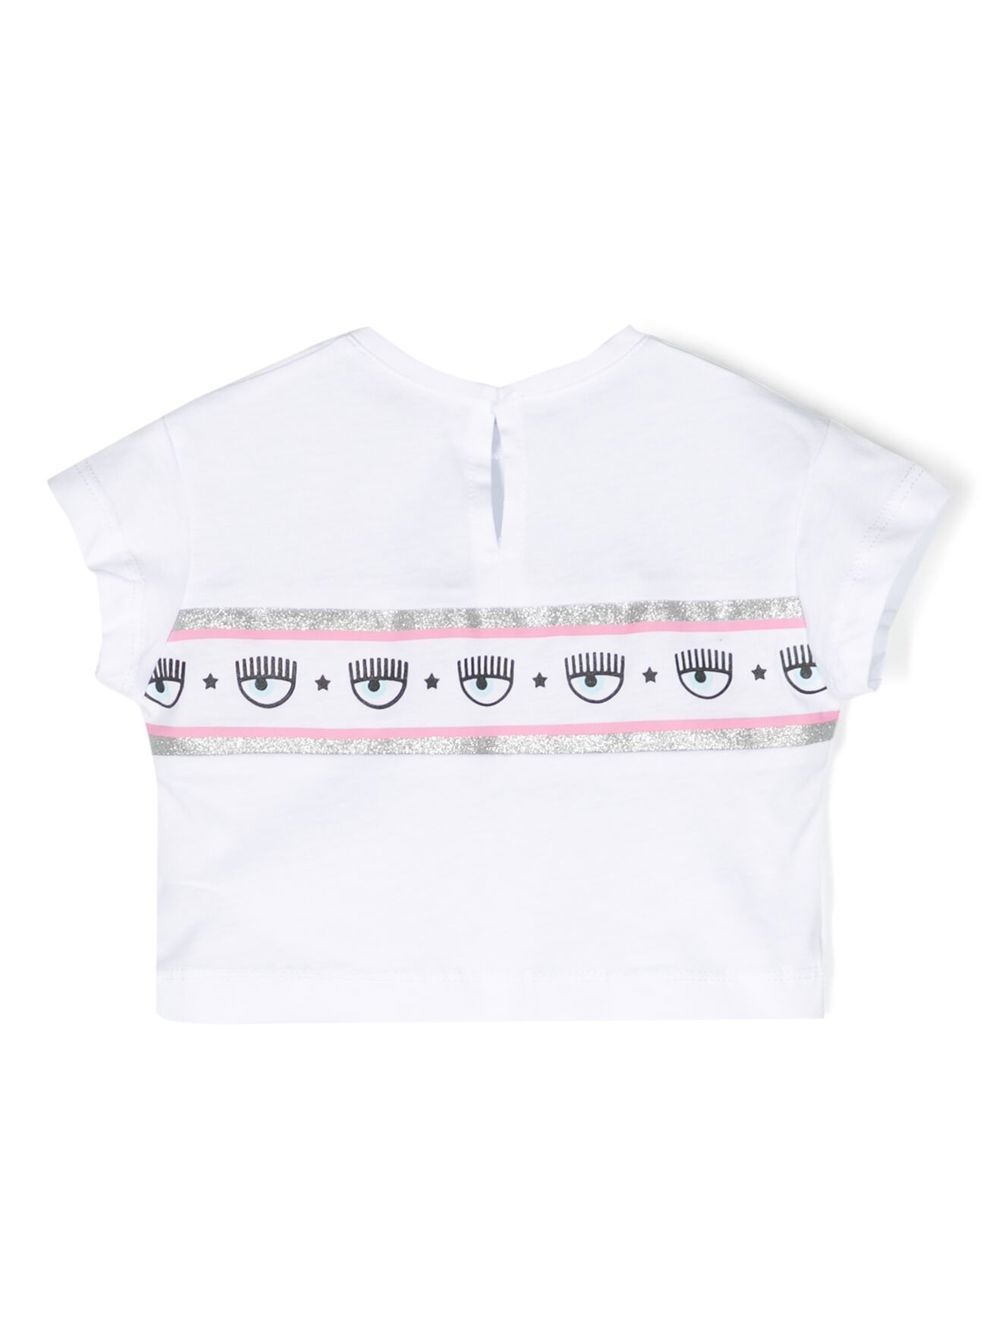 T - shirt con fascia logata - Rubino Kids